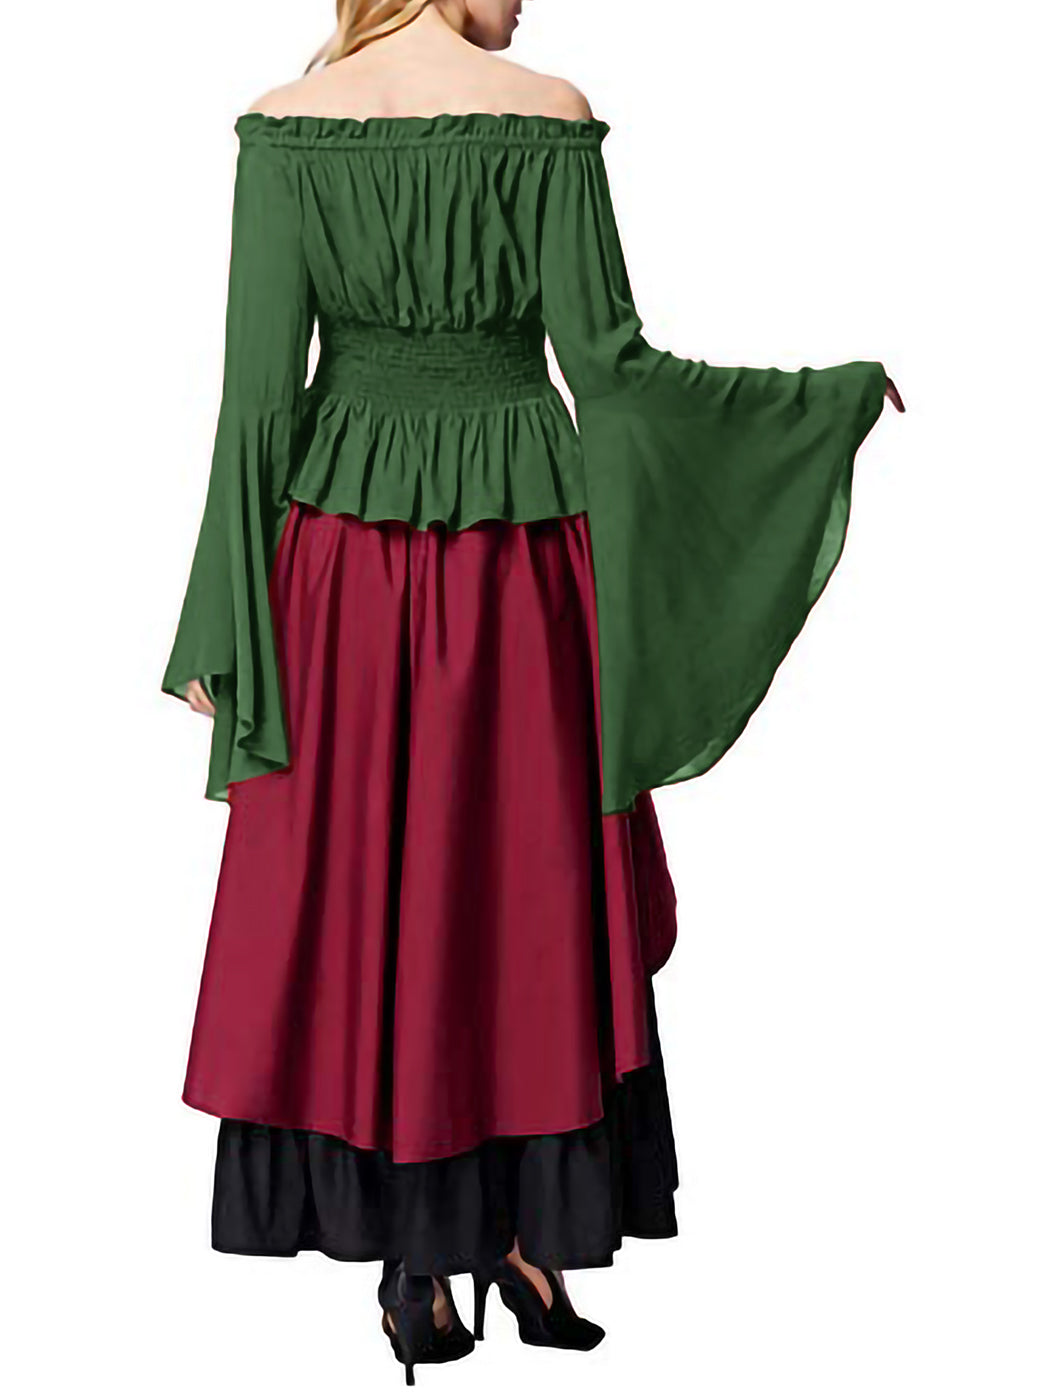 Long Sleeve Off Shoulder Peasant Shirt Gothic Renaissance Blouse Medieval Victorian Costume Boho Tops